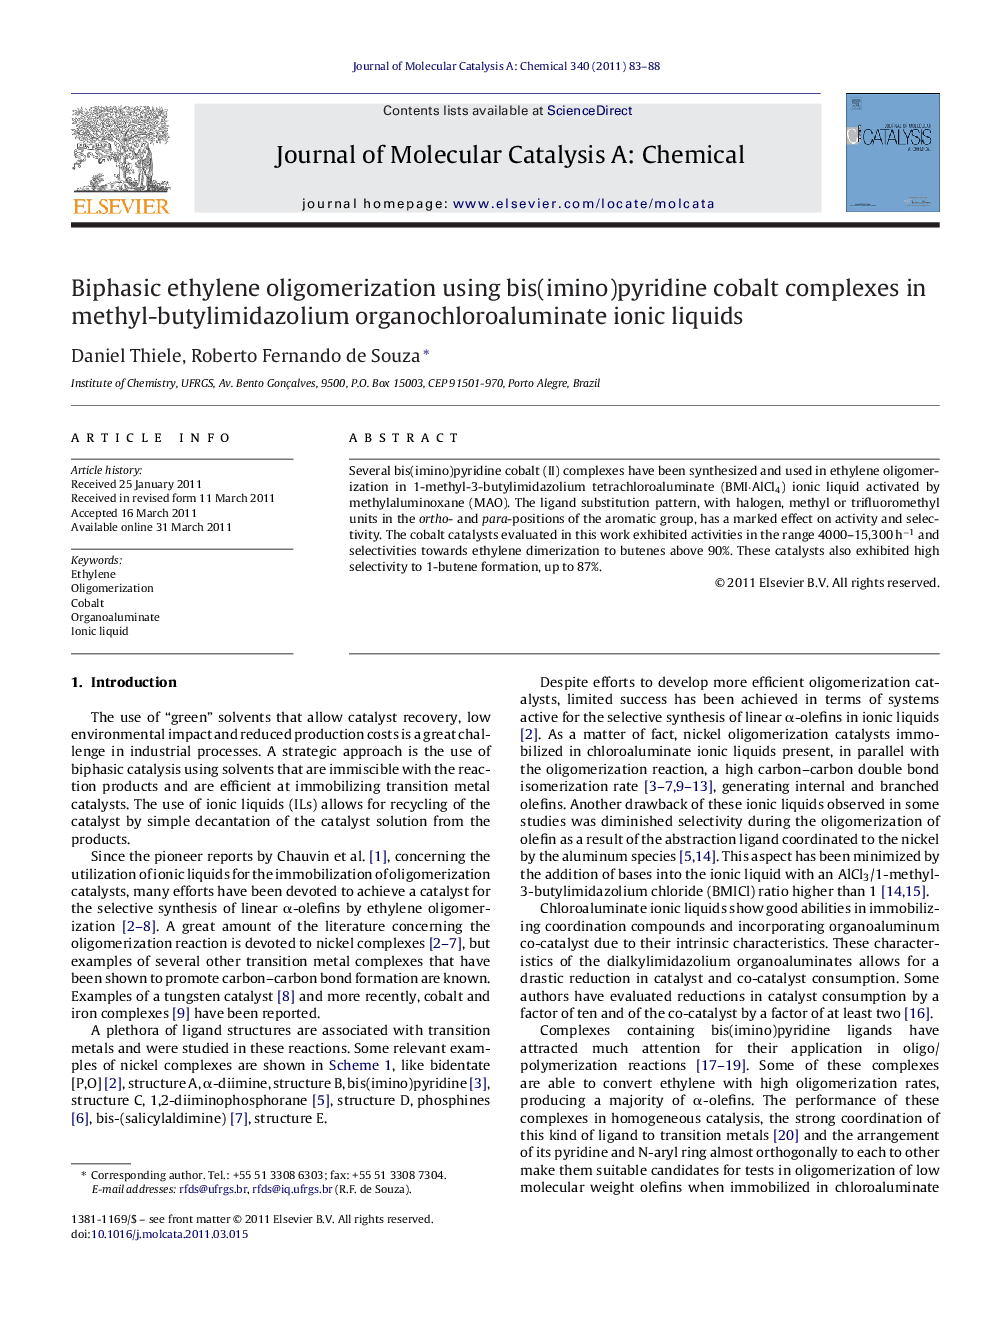 Biphasic ethylene oligomerization using bis(imino)pyridine cobalt complexes in methyl-butylimidazolium organochloroaluminate ionic liquids